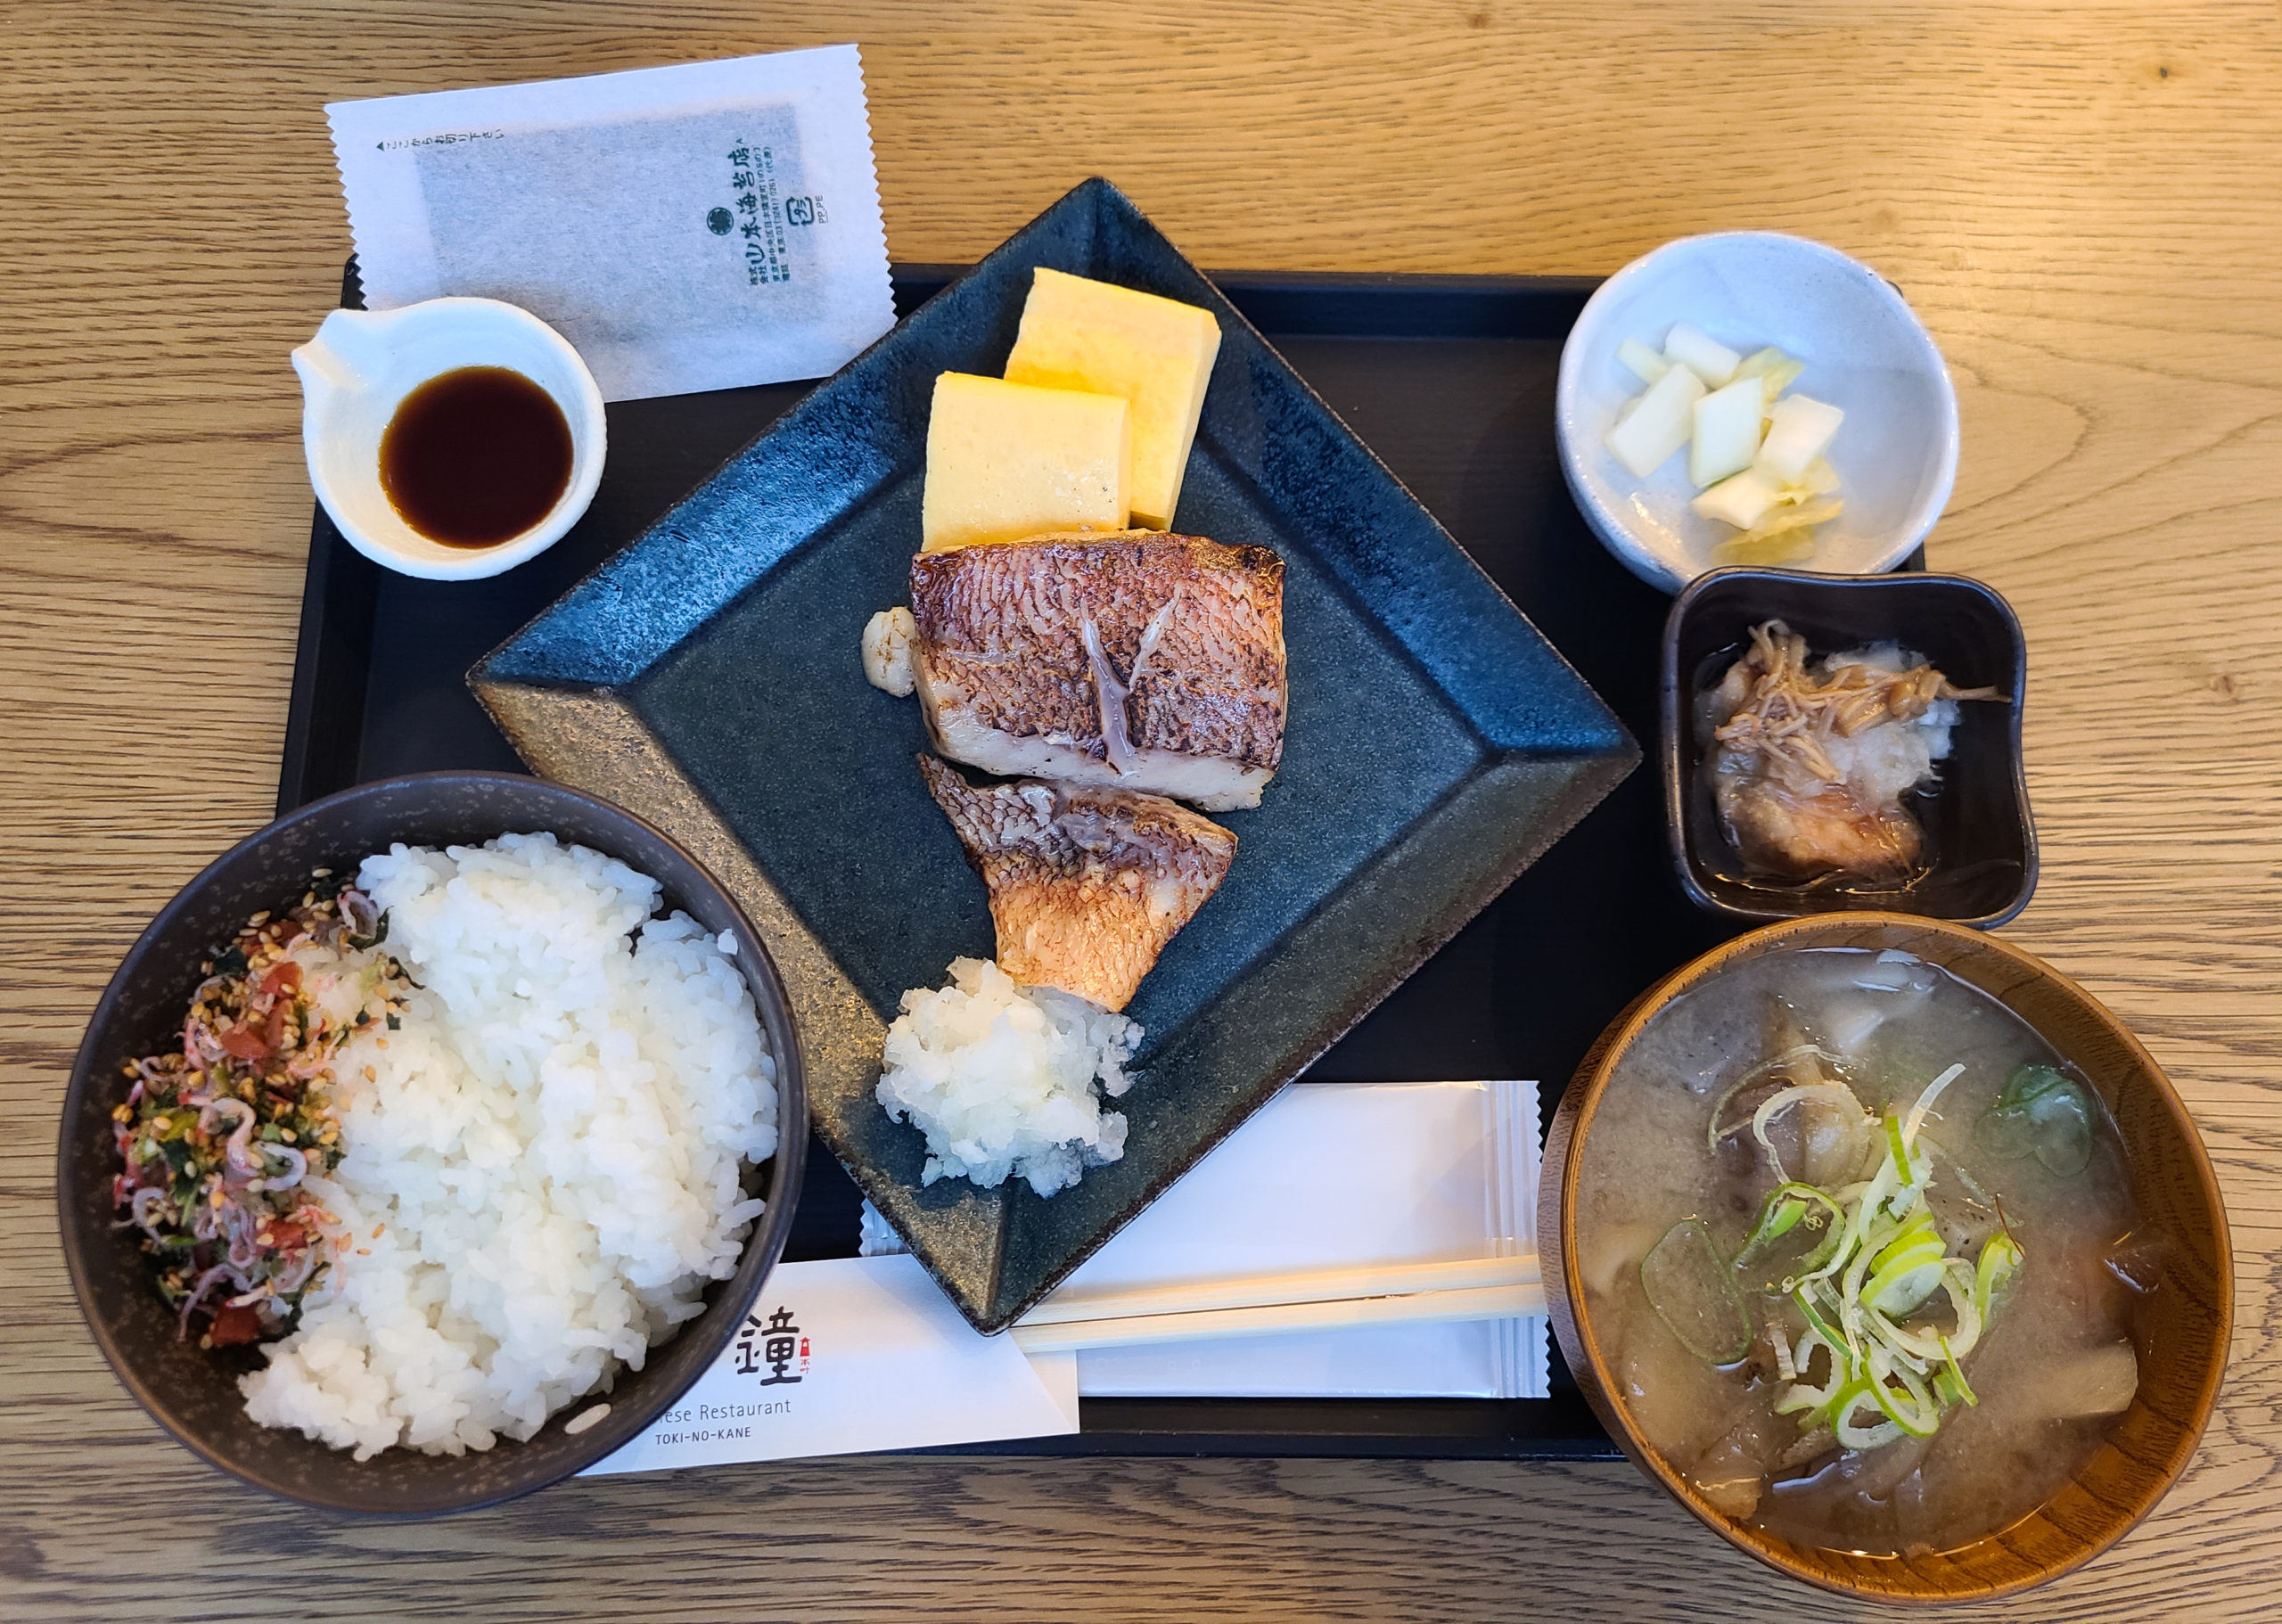 The Japanese-style breakfast served at Toki no Kane